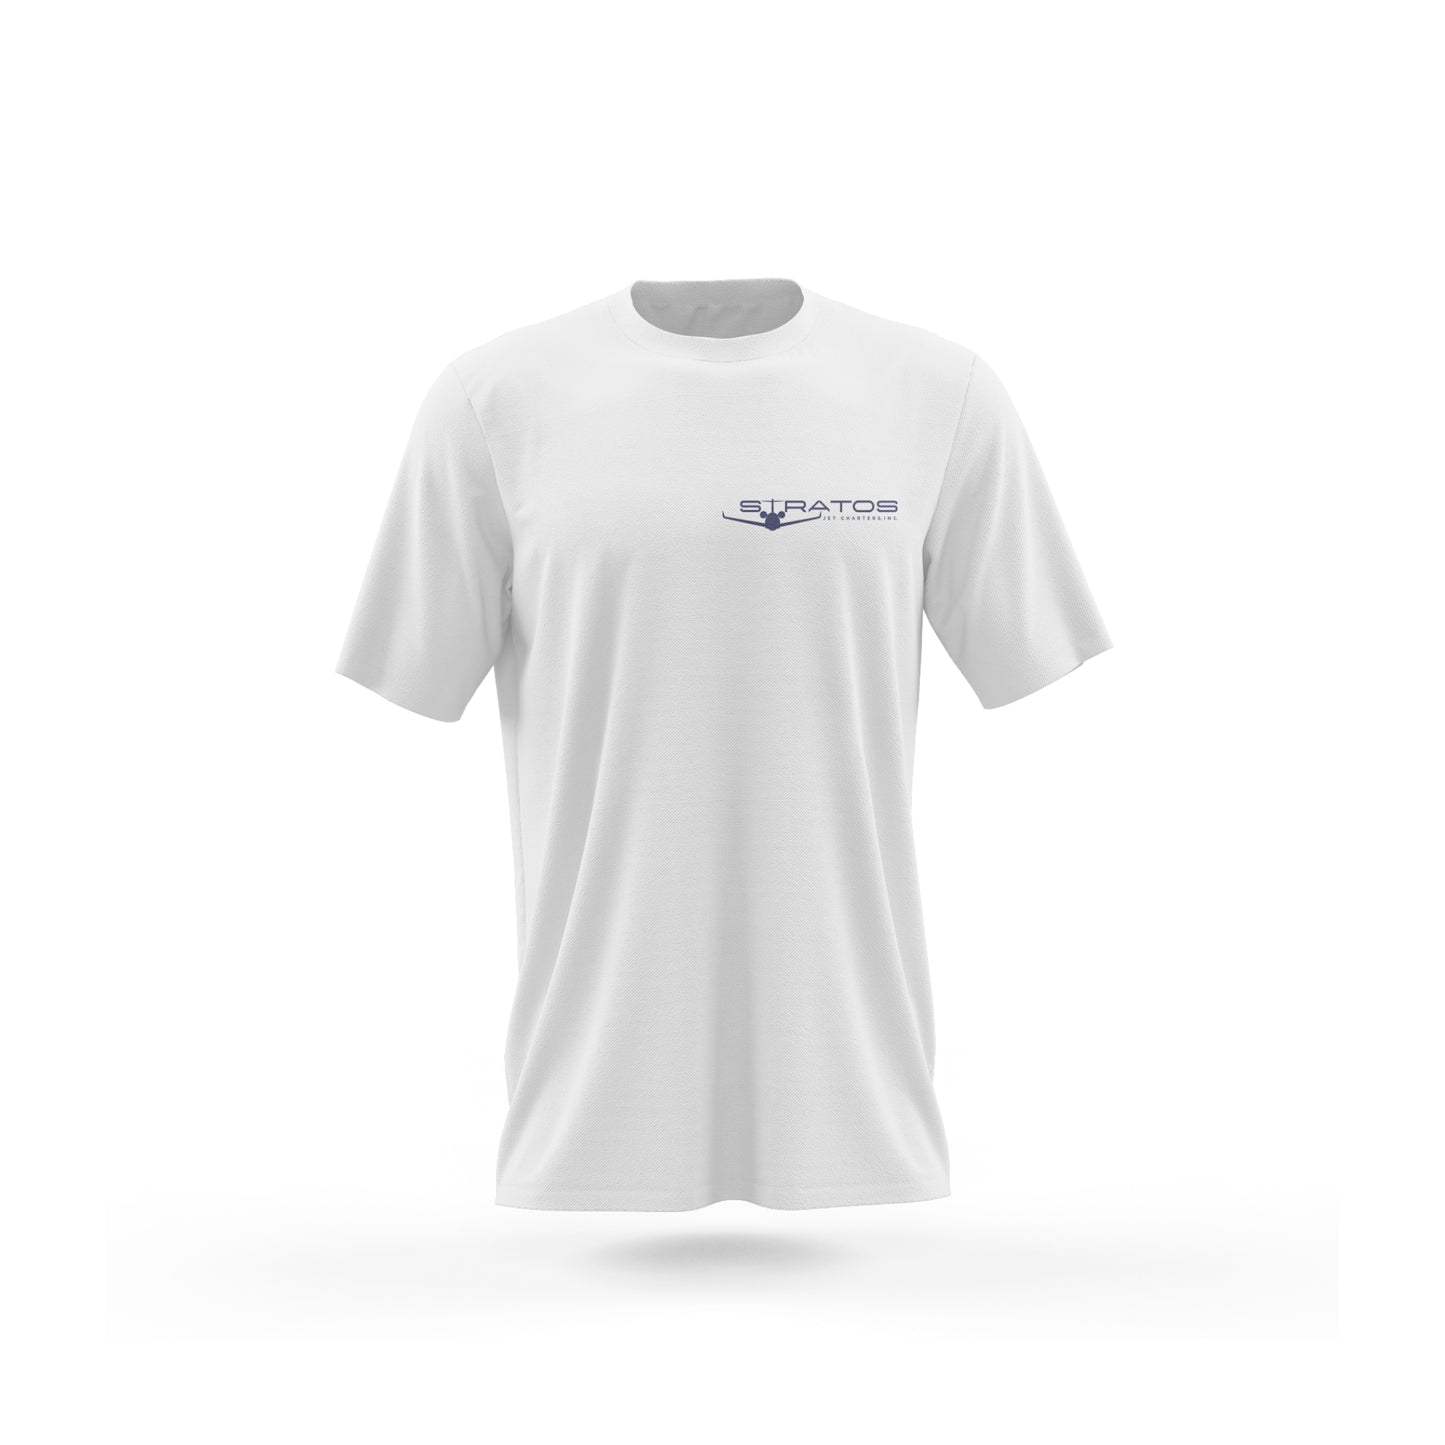 USA T-shirt - White - Short Sleeve